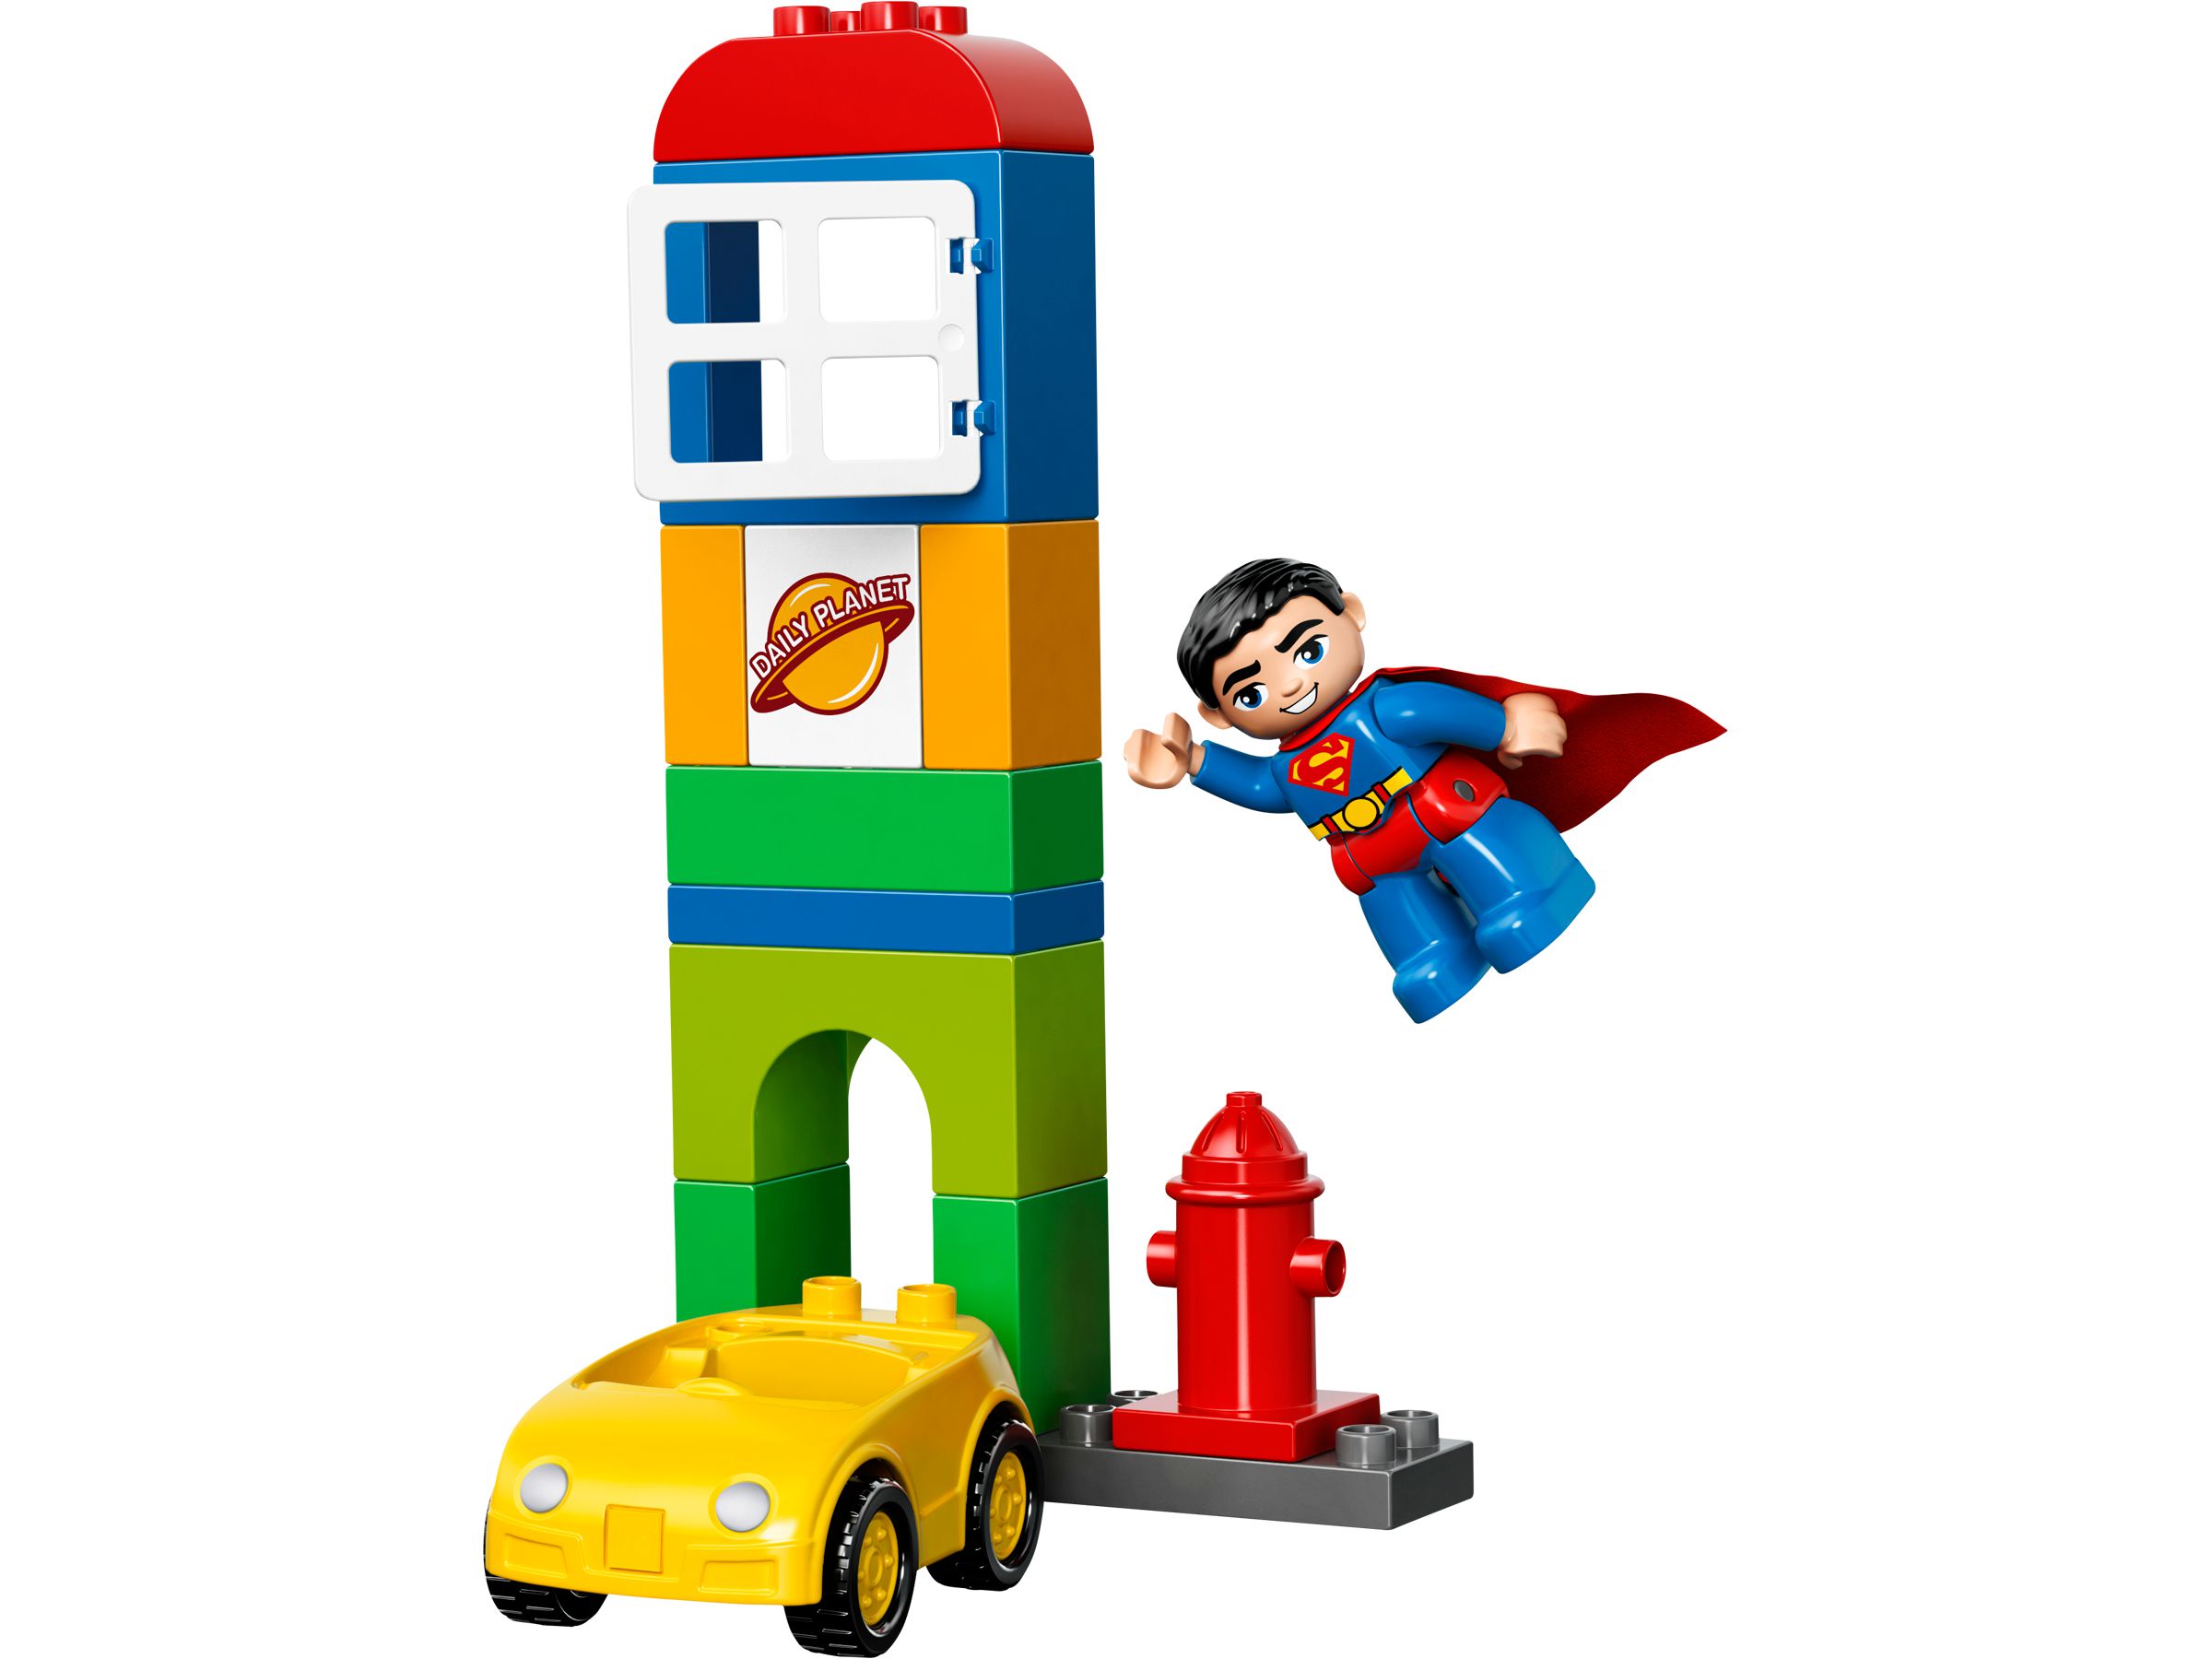 LEGO Duplo 10543 Supermans™ Rettungseinsatz LEGO_10543_alt4.jpg